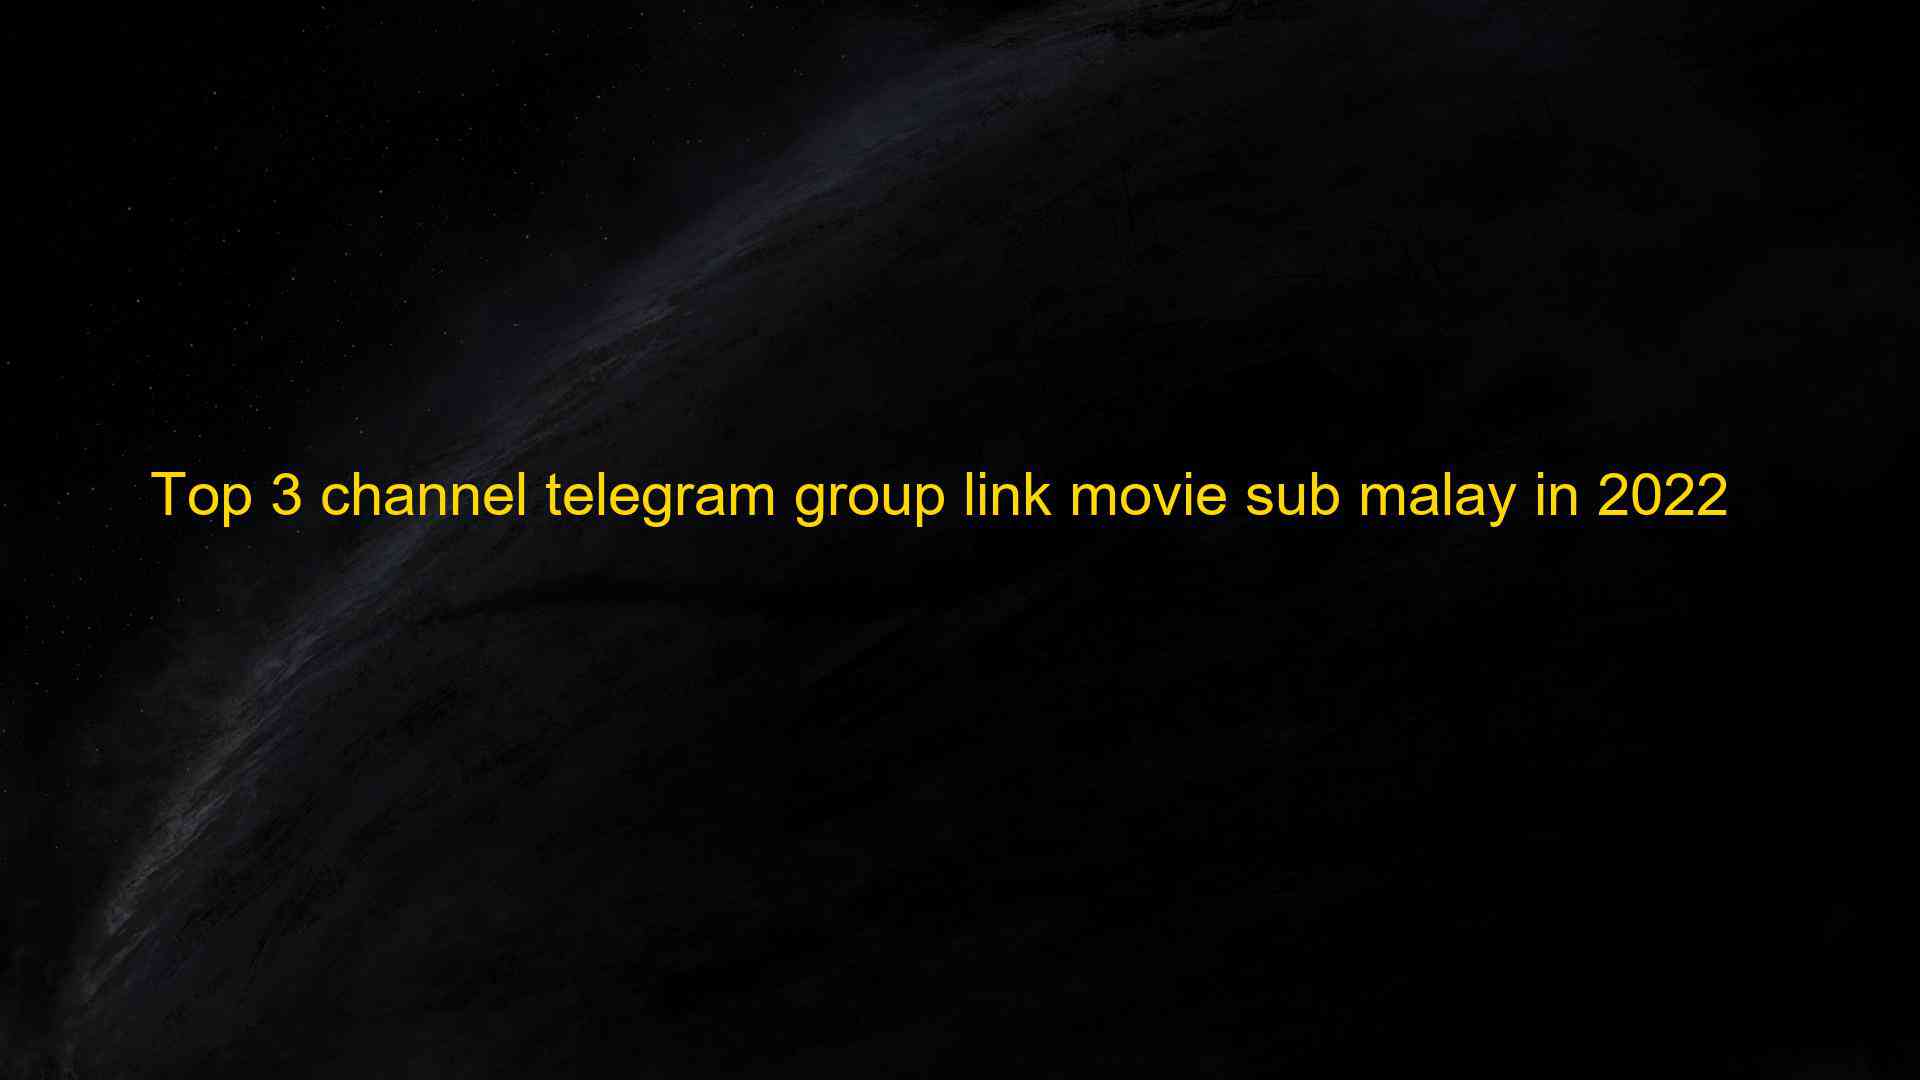 Top 3 Link Channel Telegram Movie Sub Malay 2022 - ChungKhoanAZ